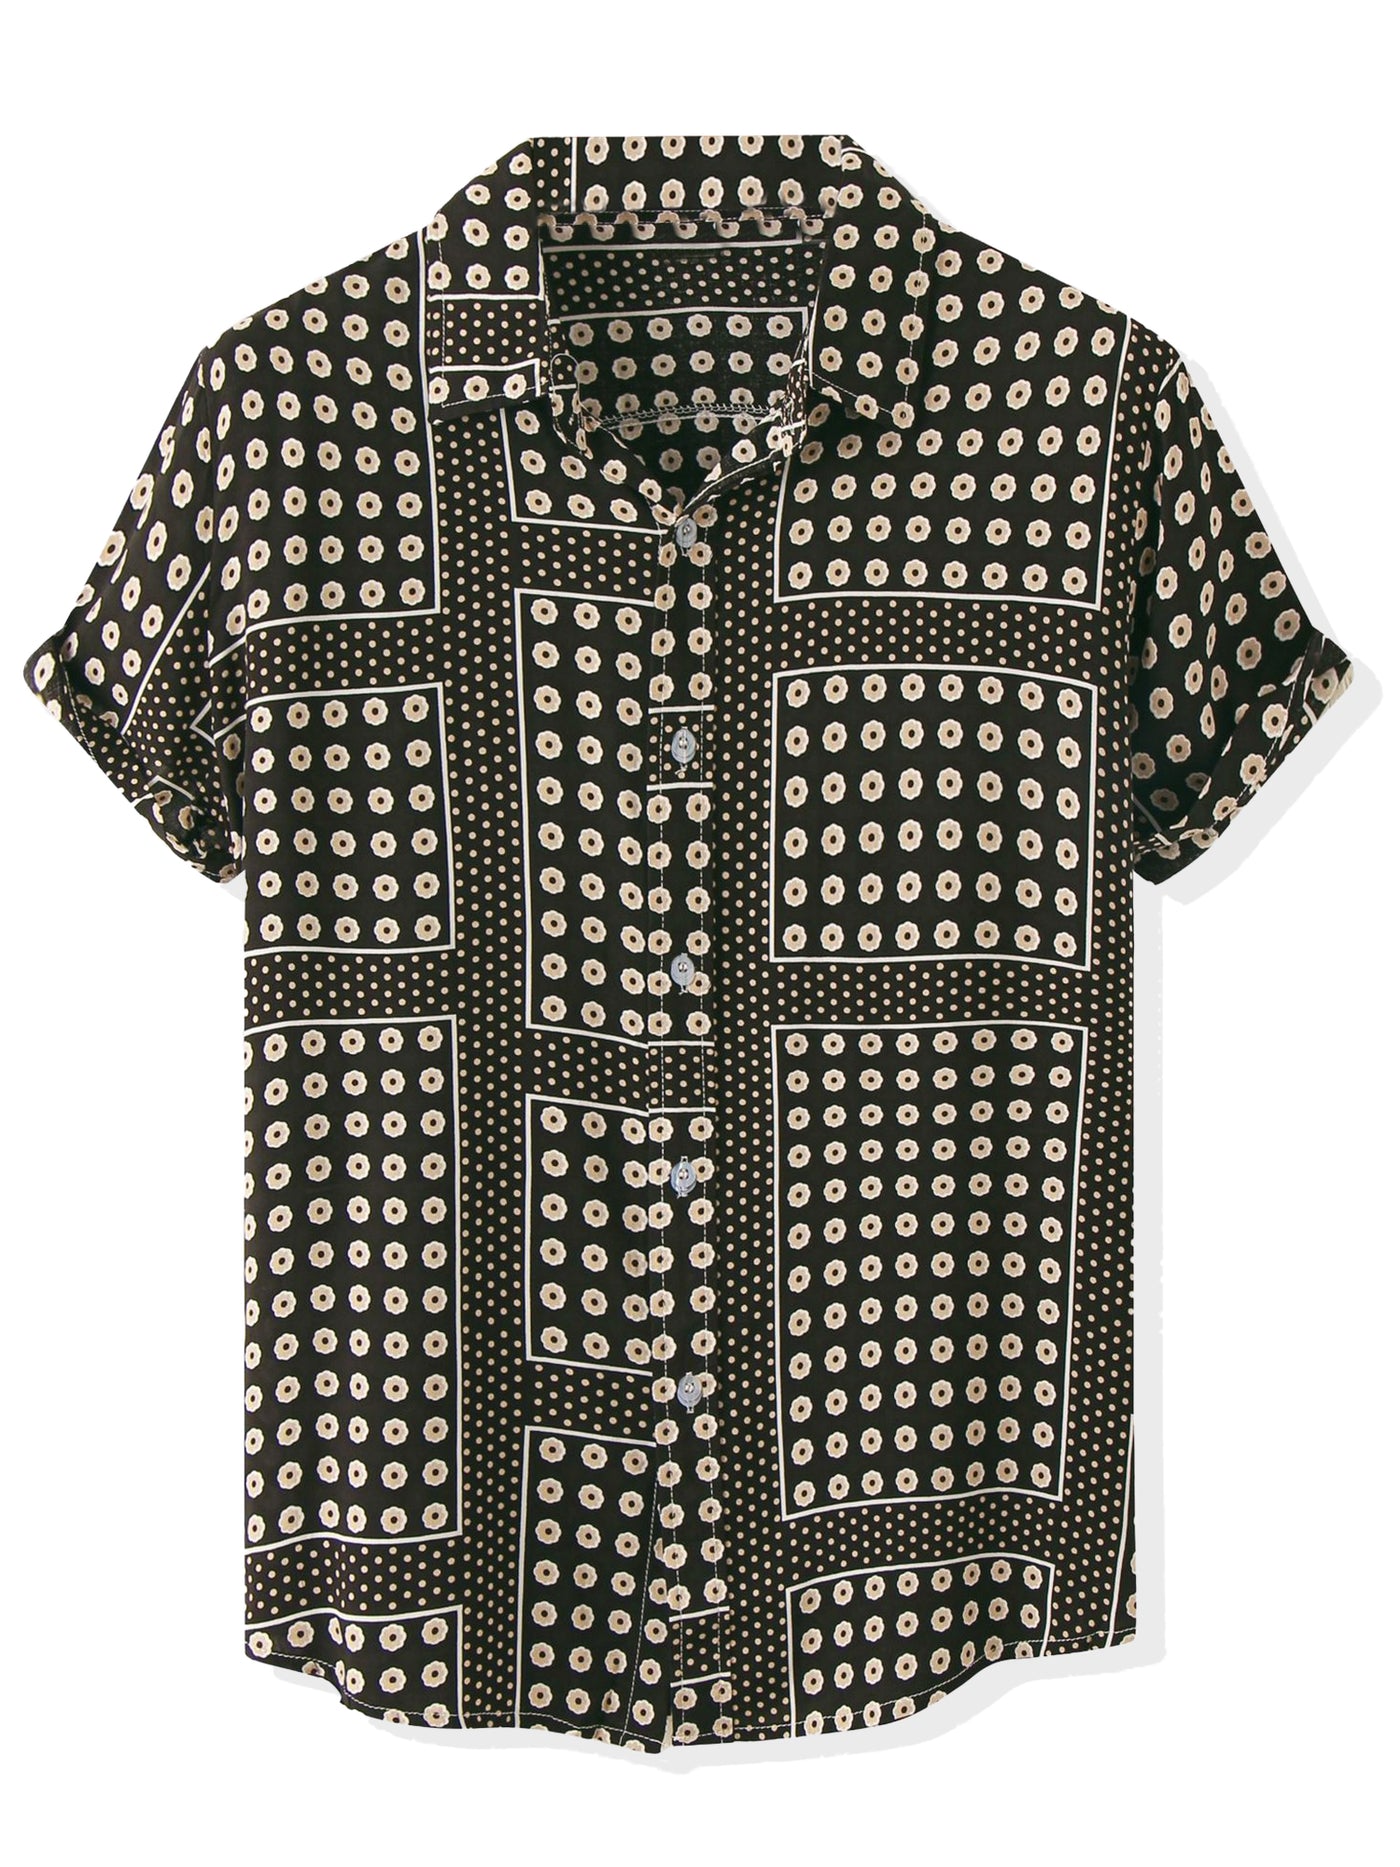 Bublédon Polka Dots Shirts for Men's Short Sleeves Color Block Flower Pattern Summer Shirt